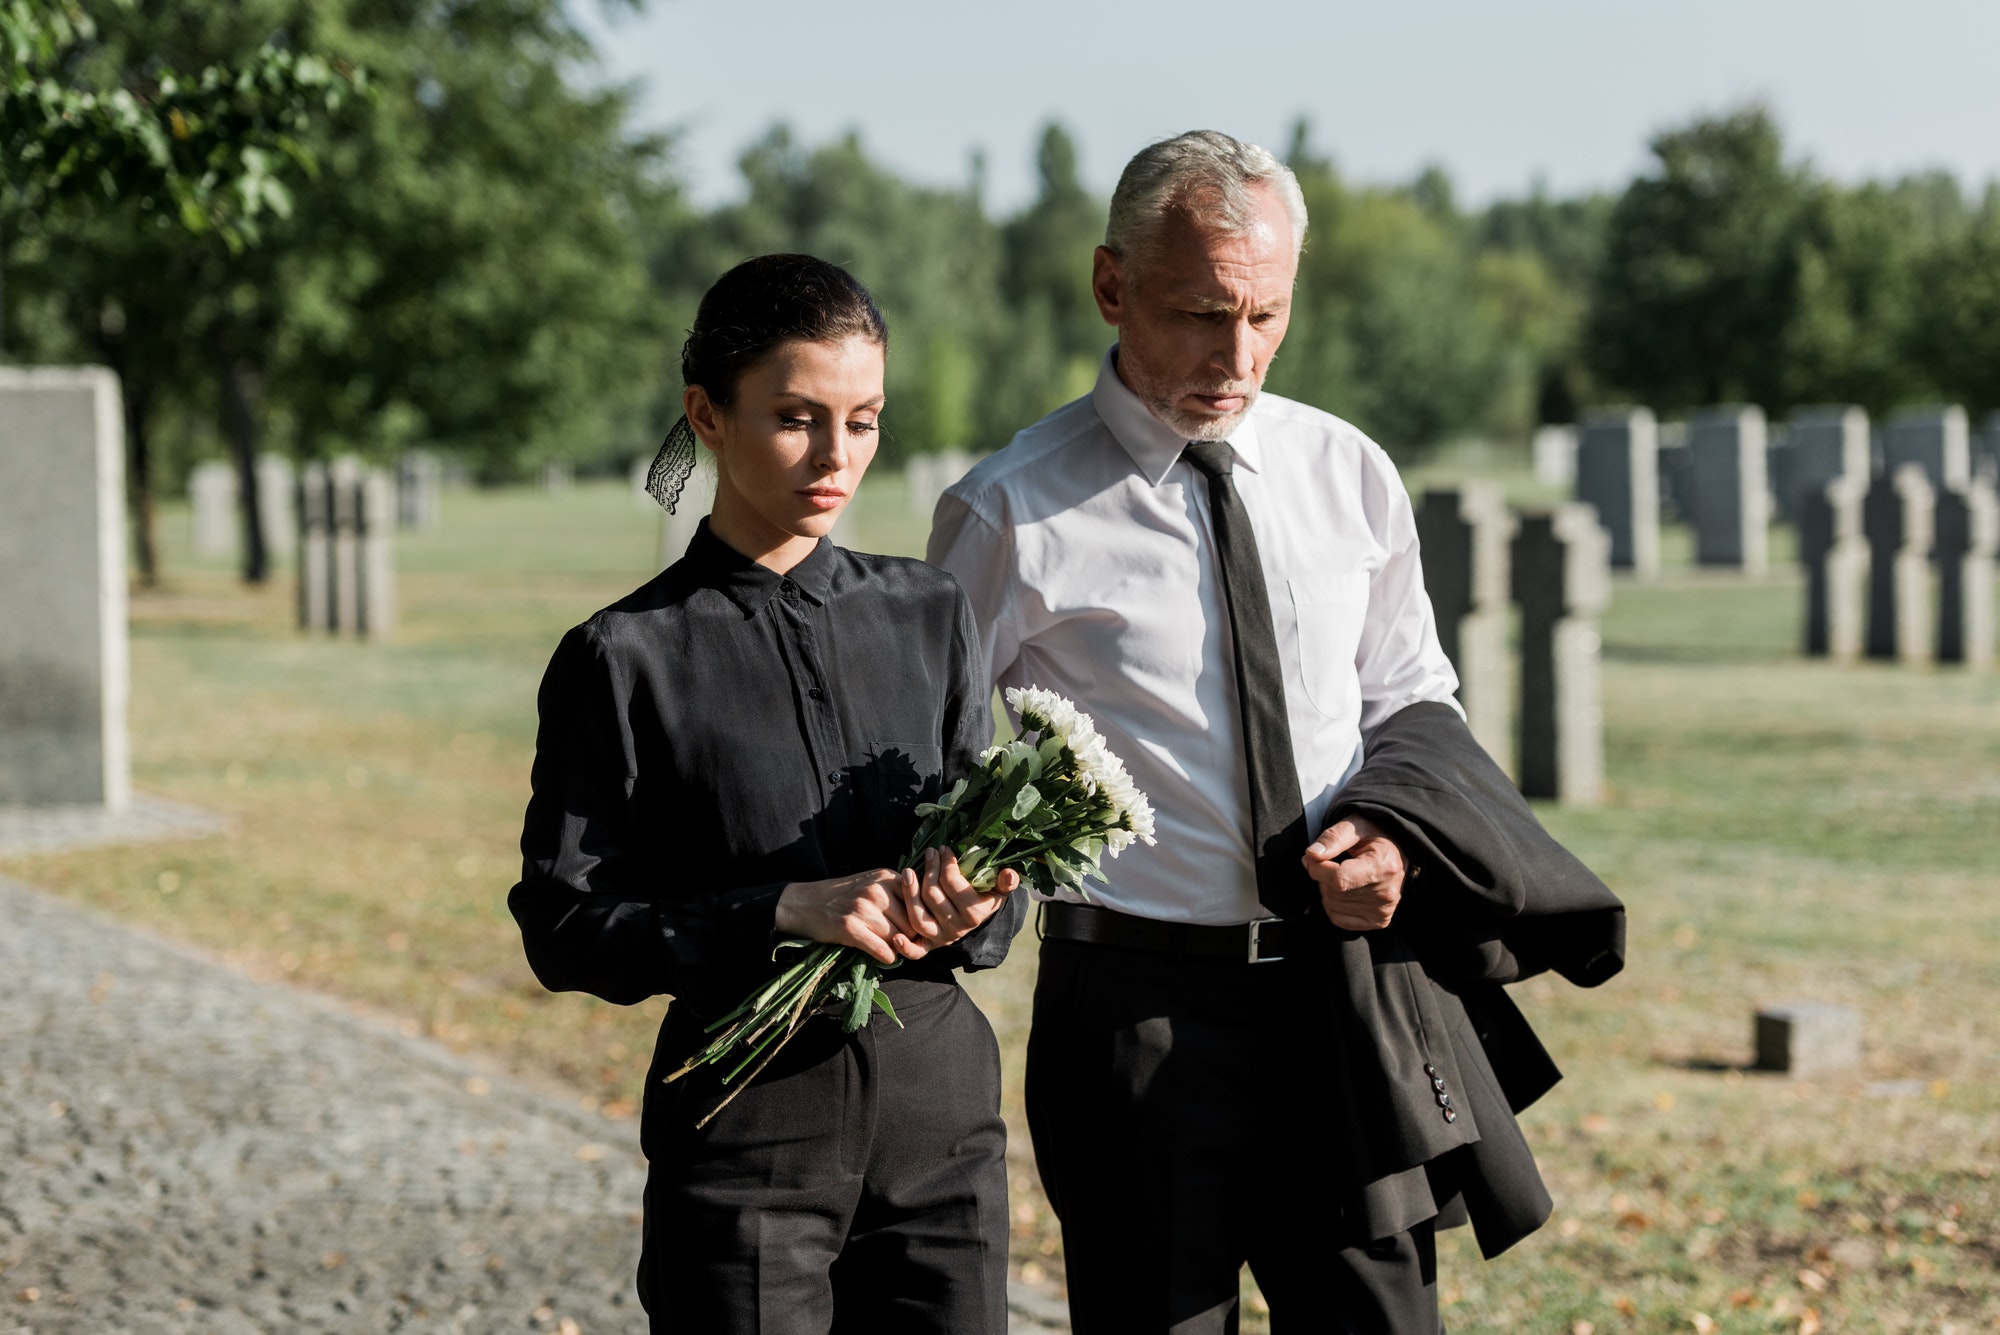 bearded-senior-man-walking-near-woman-with-flowers-on-funeral.jpg